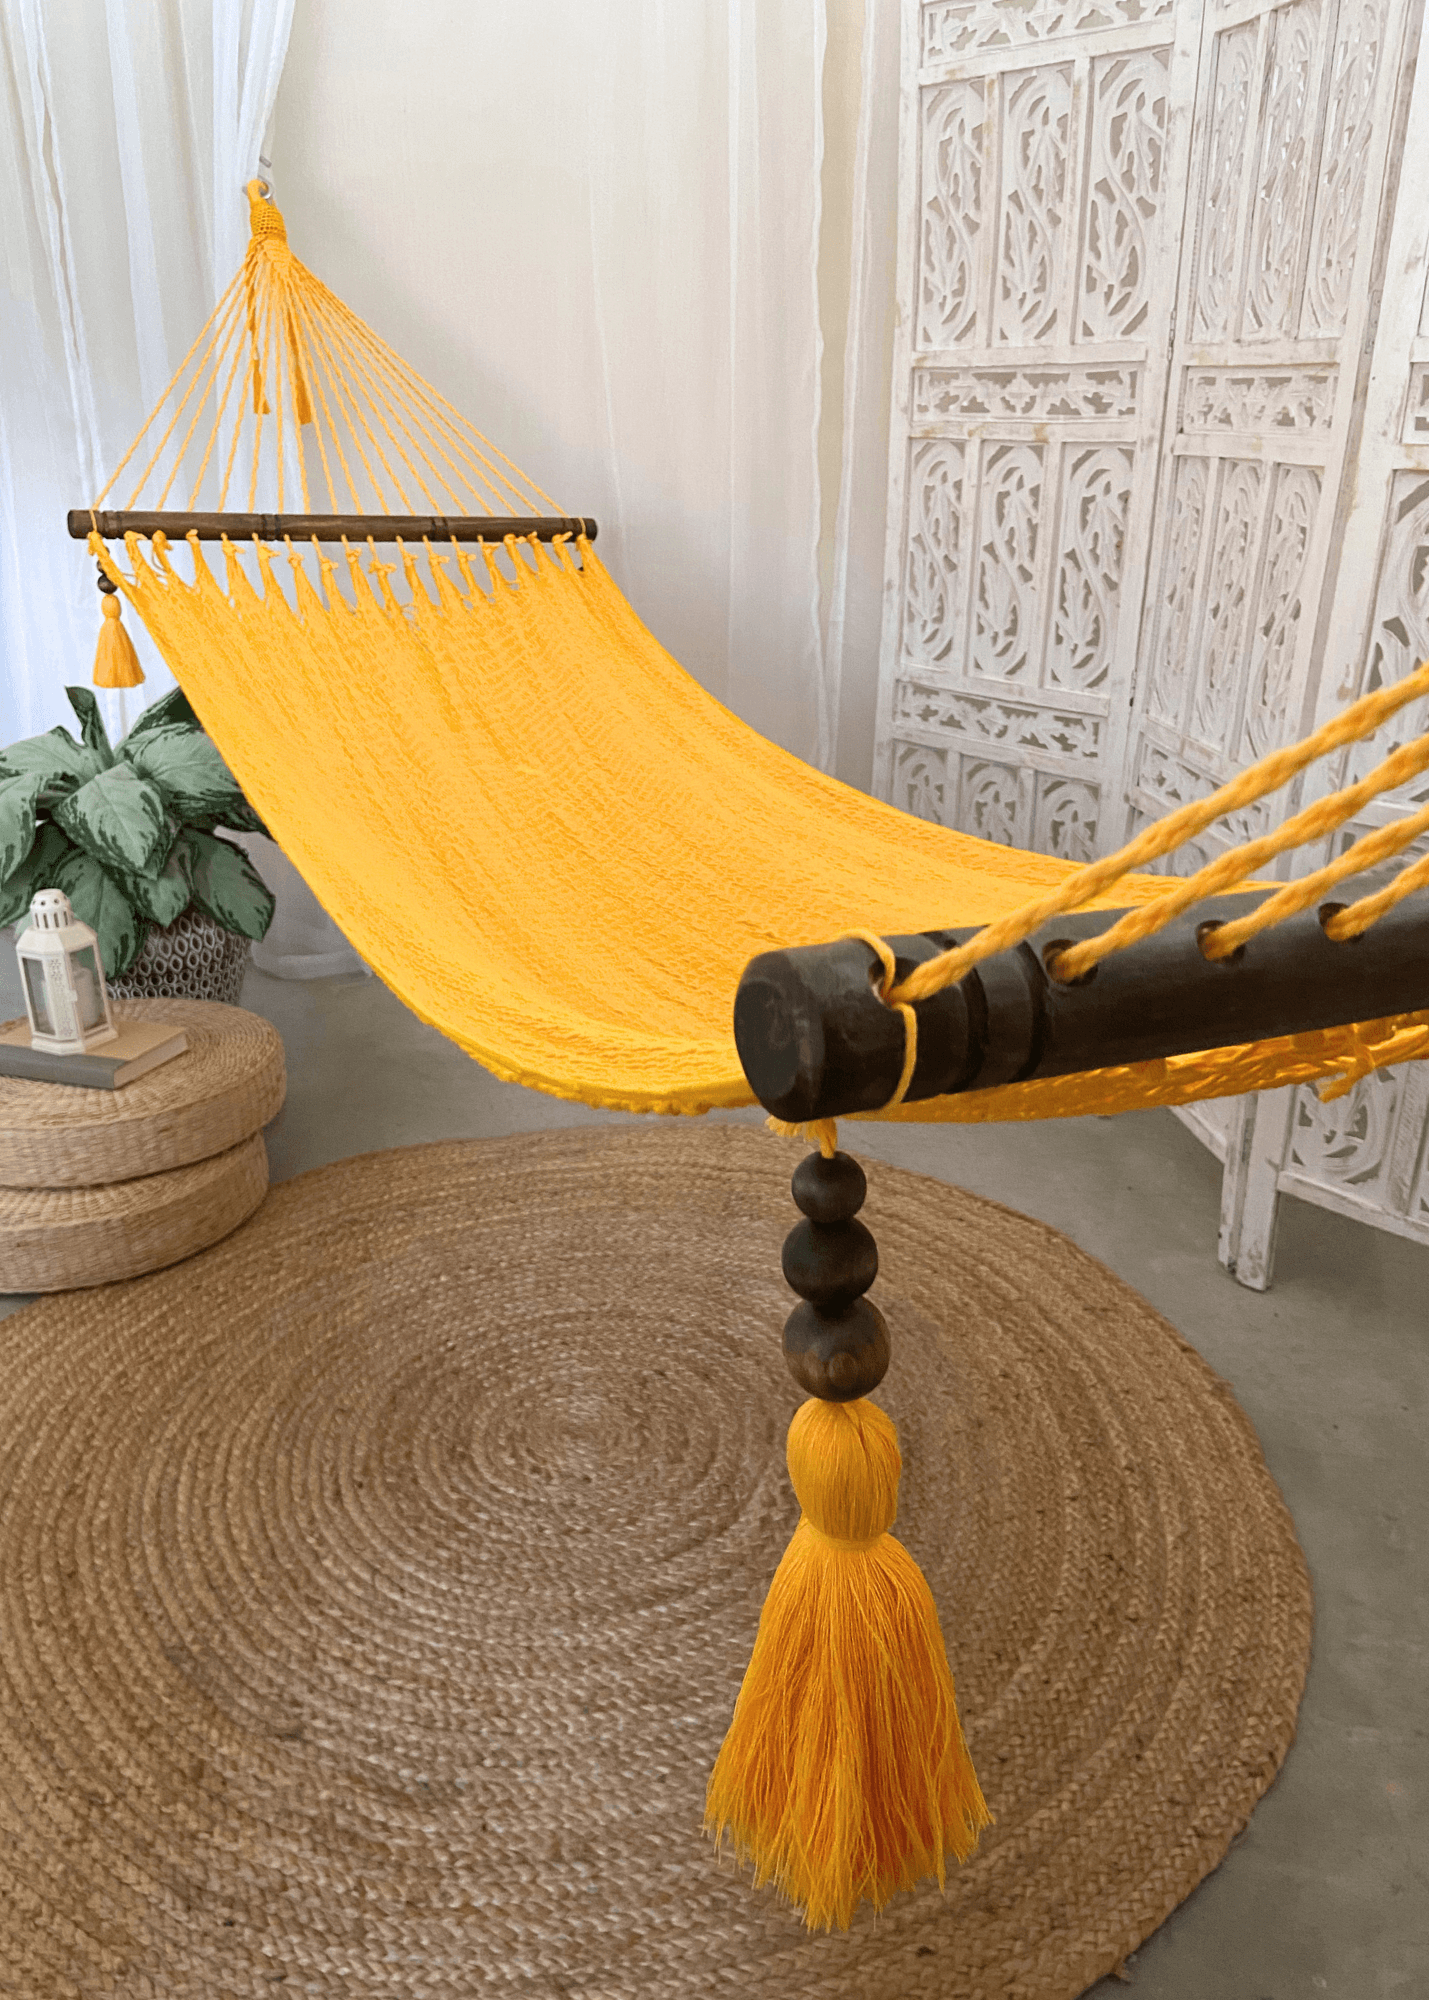 yellow hammock handwoven with hanging wood beads